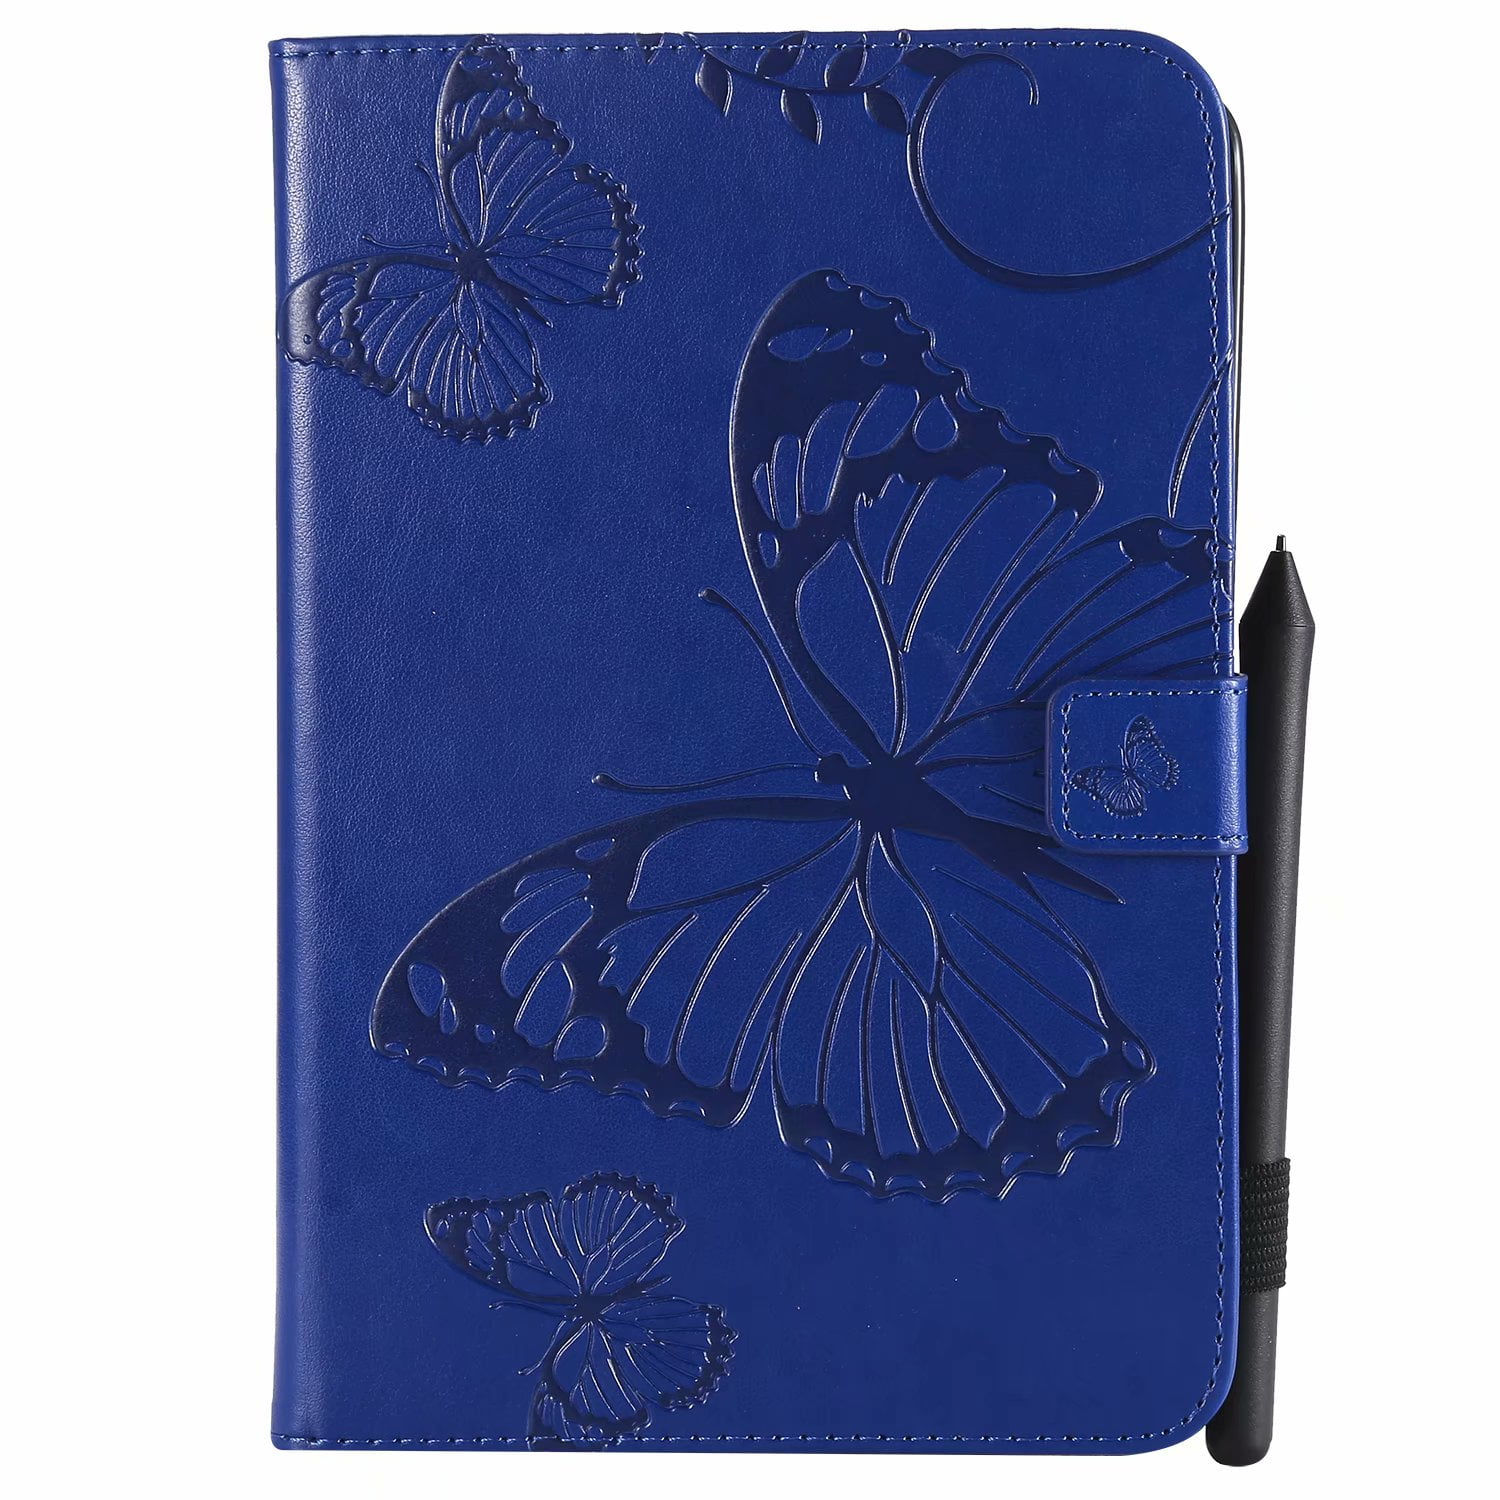 Dteck iPad Air 2 / iPad Air / iPad 5th Gen Tablet Case, Slim Butterfly ...